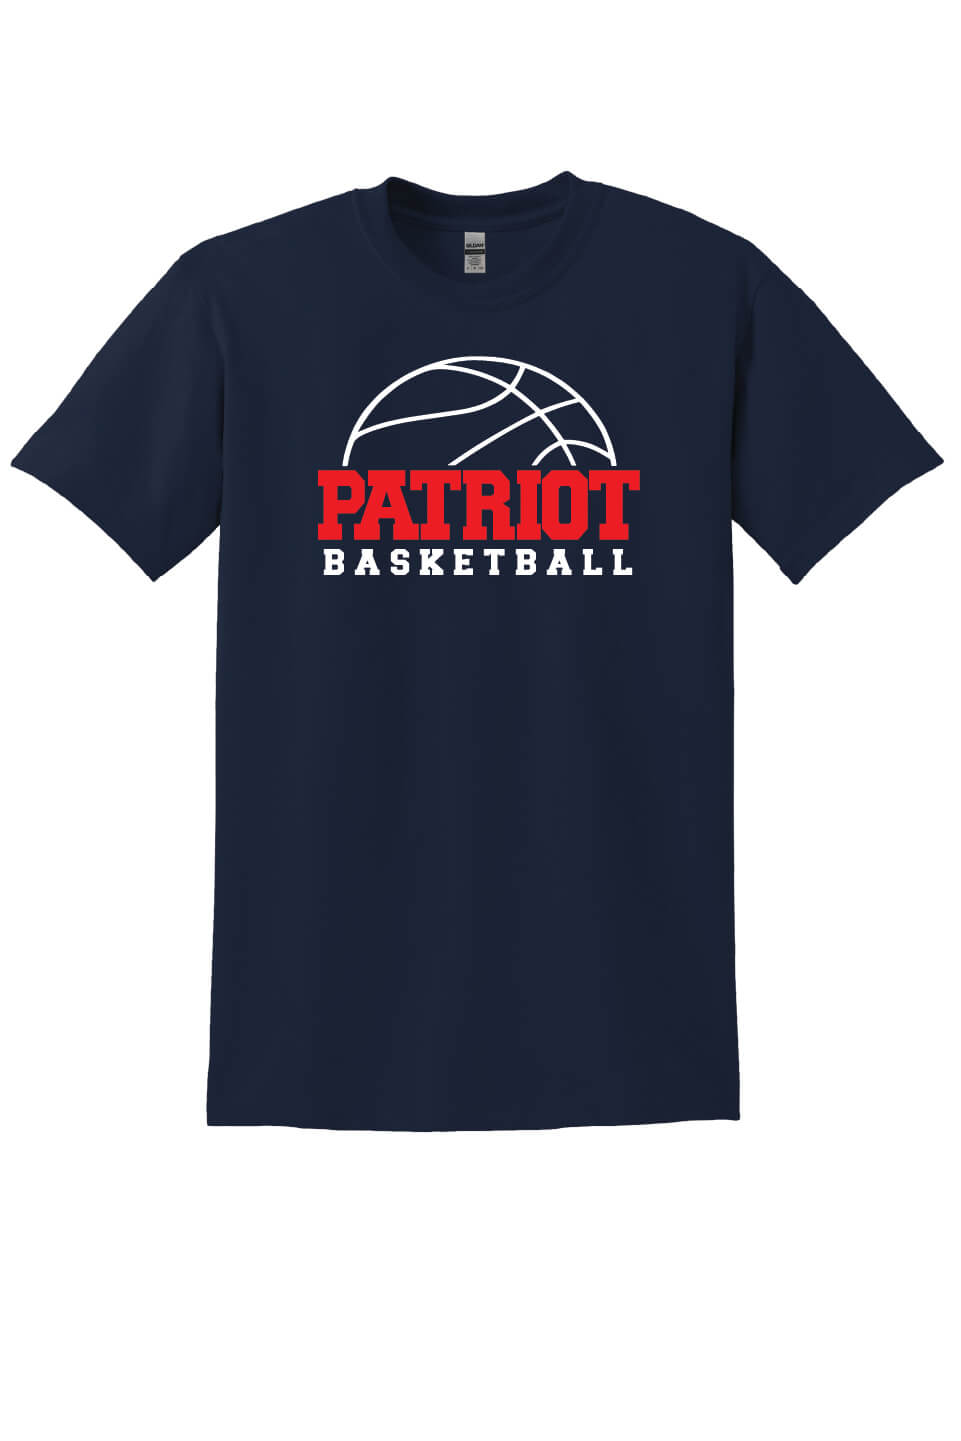 Patriot Basketball Short Sleeve T-Shirt navy